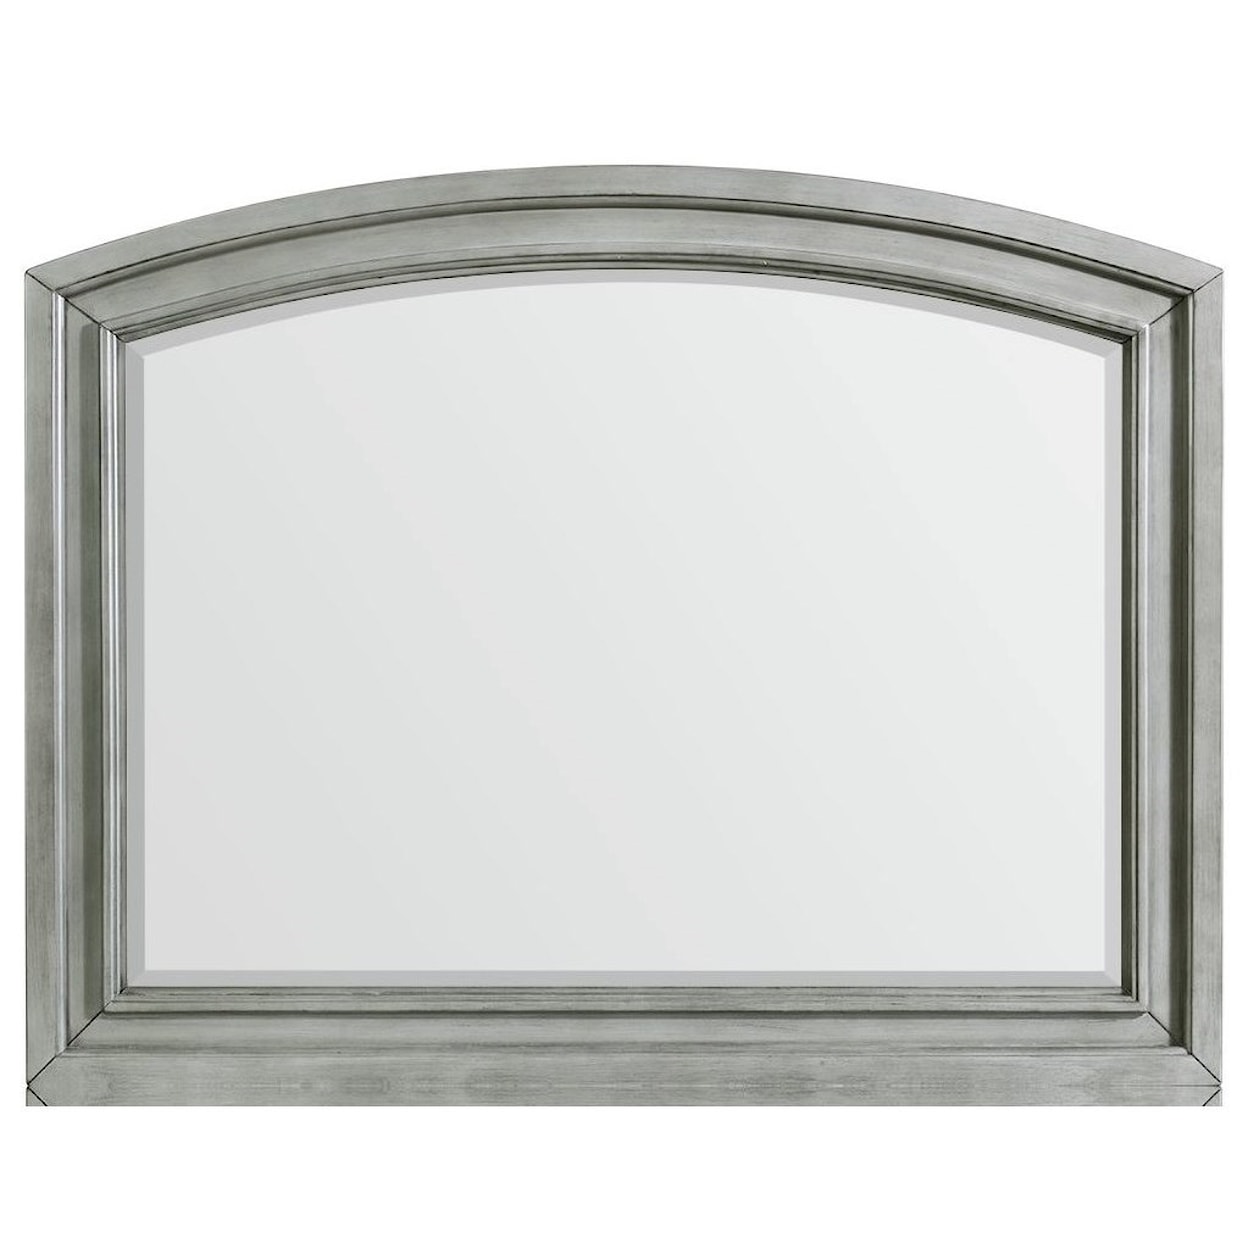 Elements International Kingston Mirror with Wood Frame